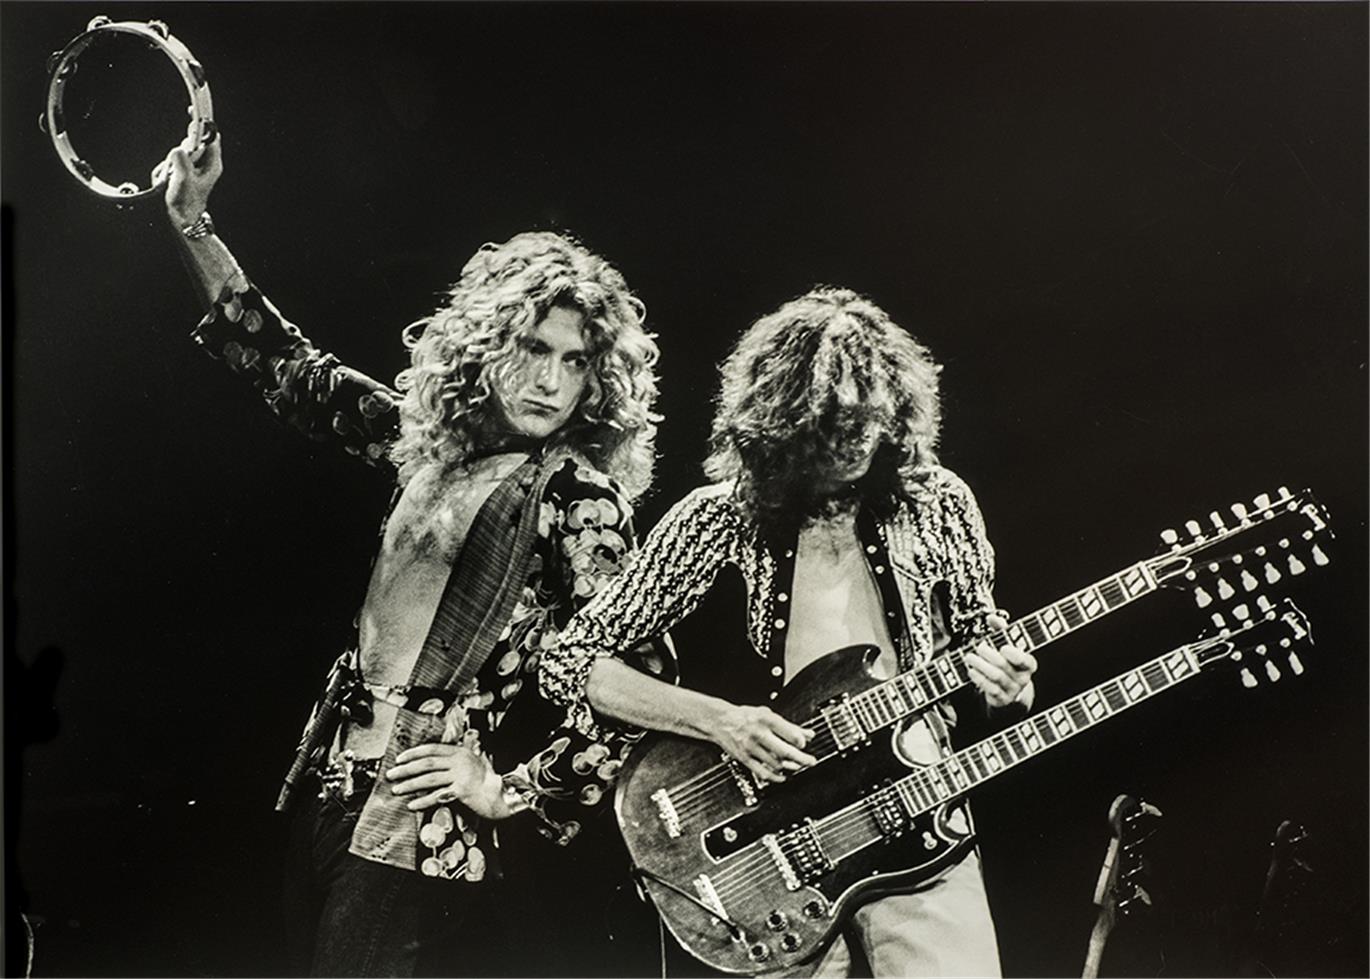 Led Zeppelin, Robert Plant & Jimmy Page, Dallas, TX - Morrison Hotel Gallery